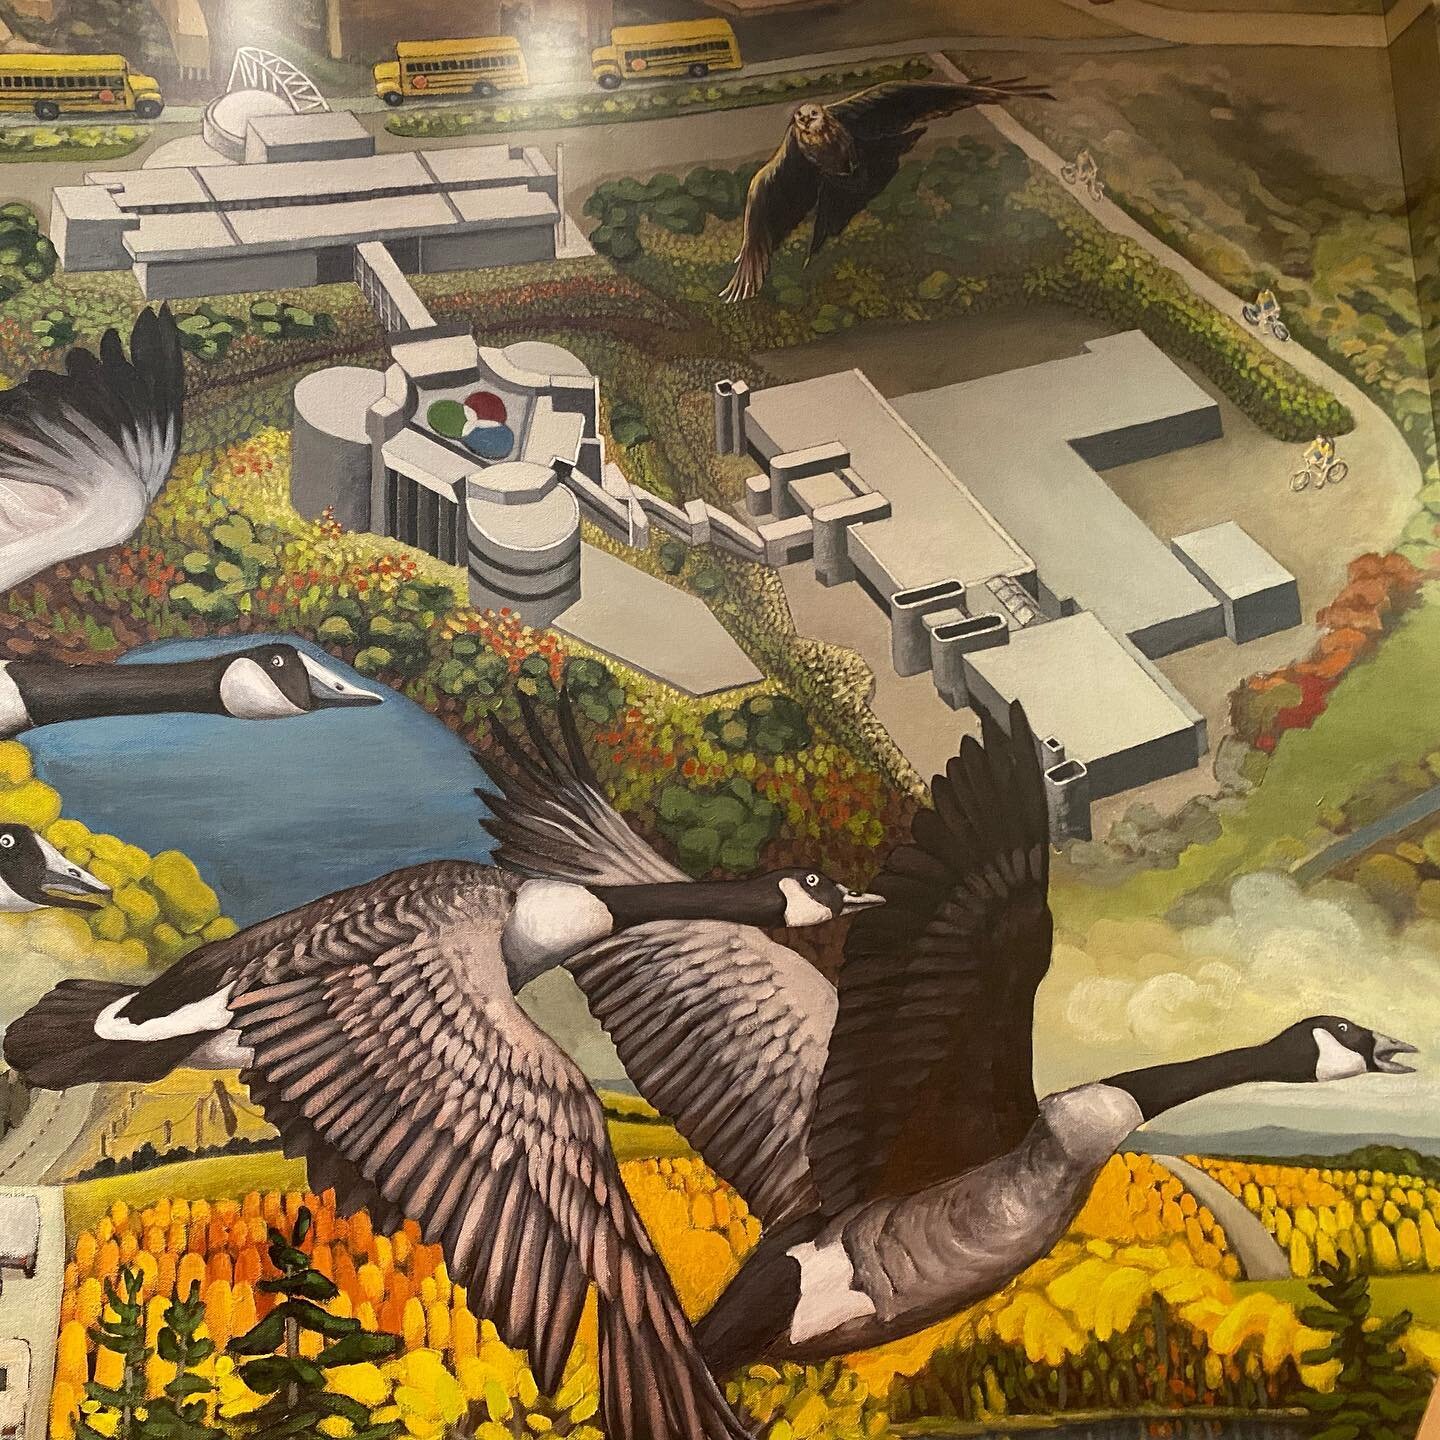 Mural @ the Ontario Science Centre &bull;&bull;&bull;
#ontariosciencecentre #mural #art #sciencecentre #birdseyecview #flemingtonpark #kidpark #agreatcapture @ontariosciencecentre